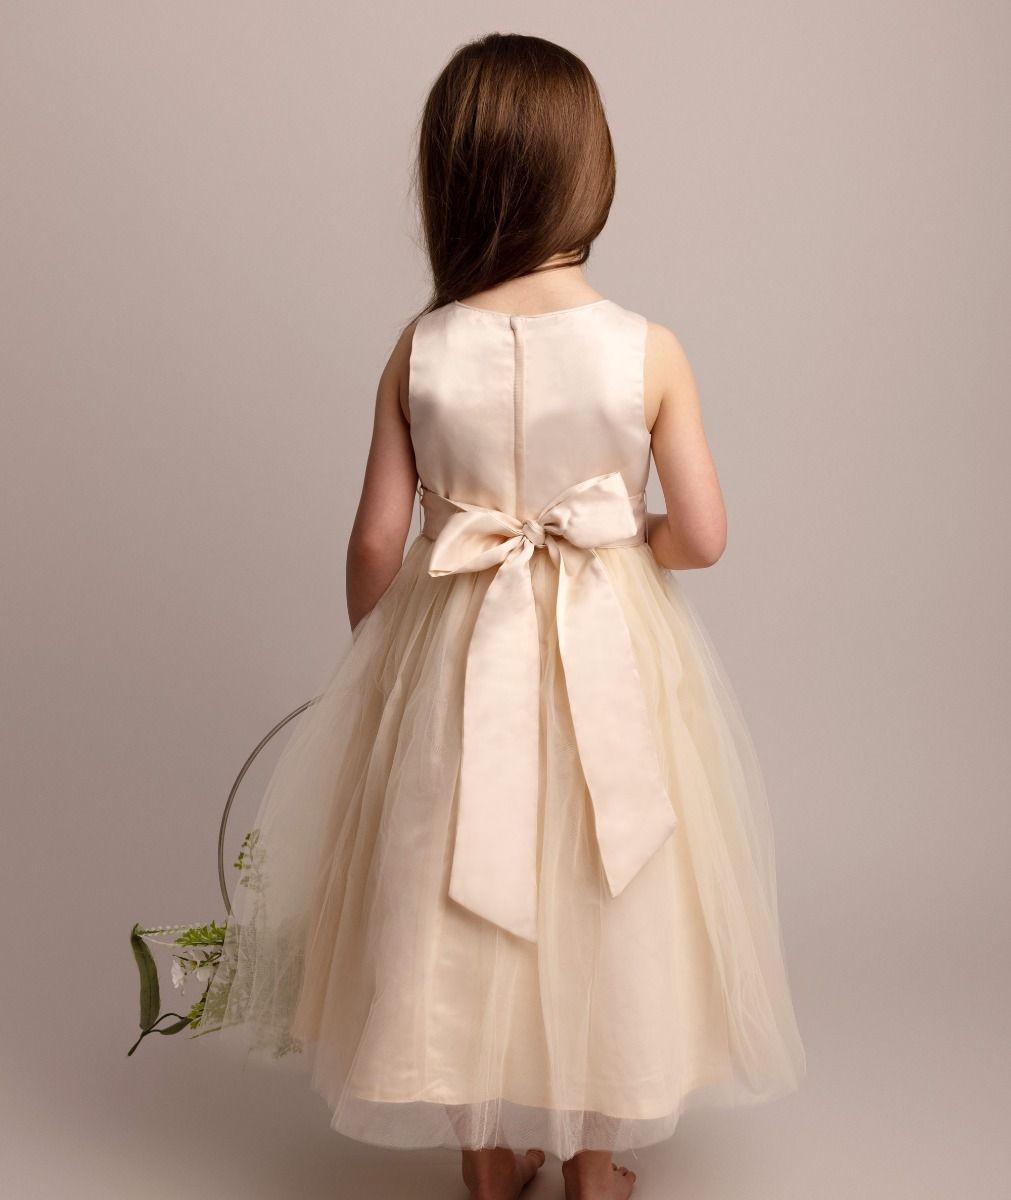 Flower Girl Dress with Tulle Skirt & Bow - HILARY - Champagne